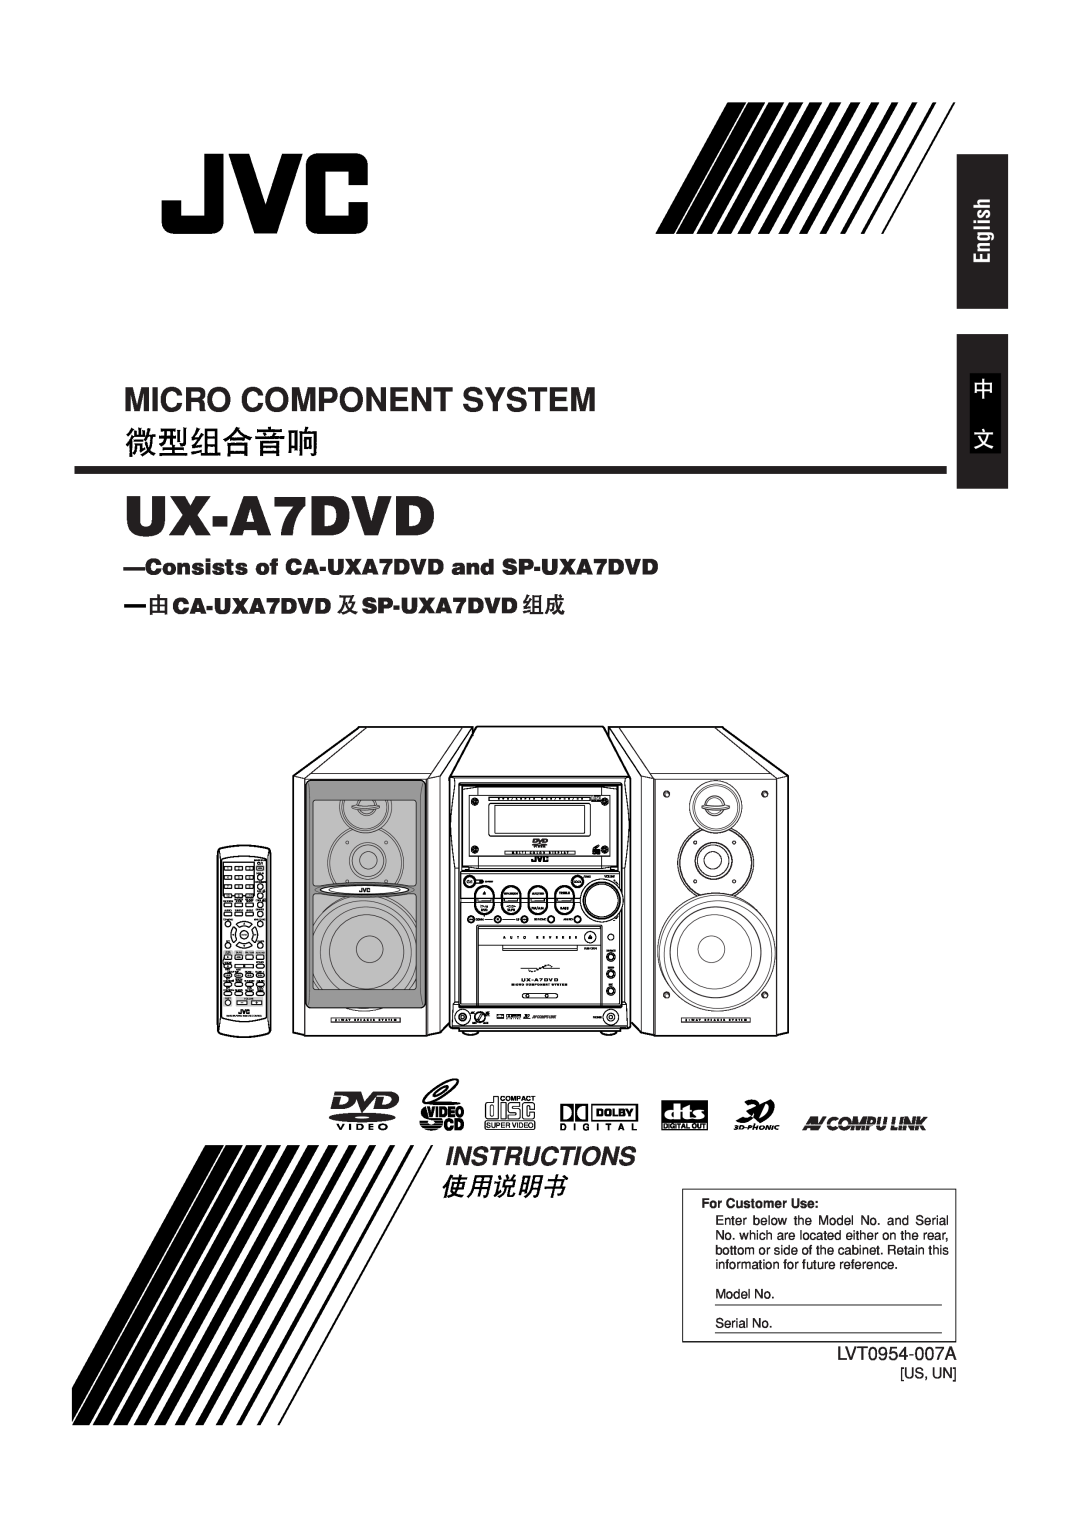 JVC LVT0954-007A manual Instructions, English, Consistsof CA-UXA7DVDand SP-UXA7DVD, CA-UXA7DVD SP-UXA7DVD, UX-A7DVD 